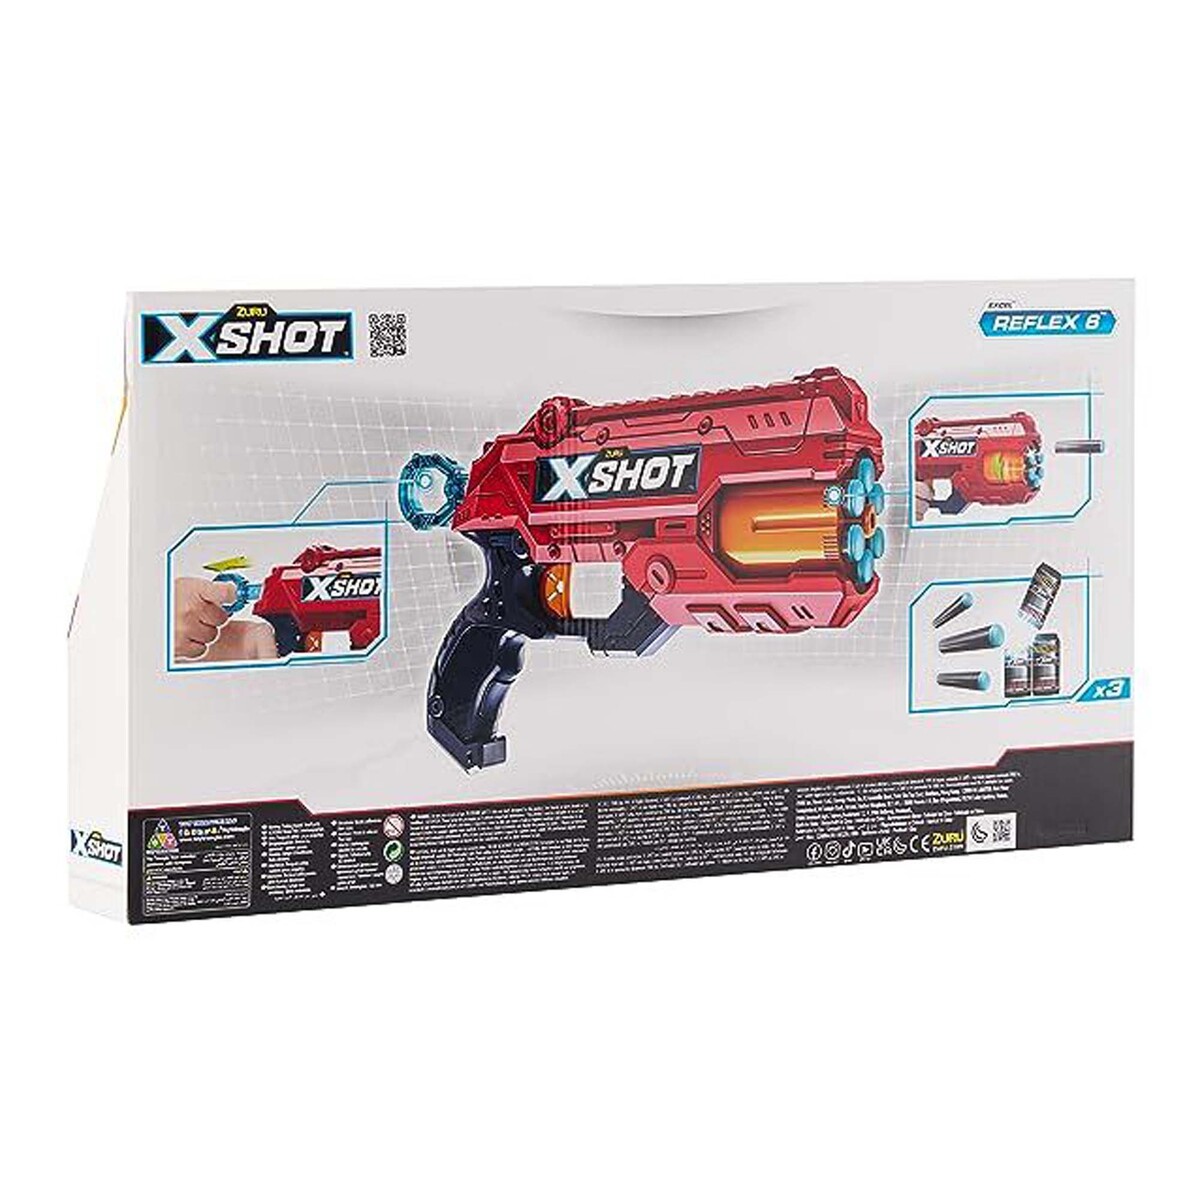 Zuru XShot Reflex 6 Blaster, XS-36434-A